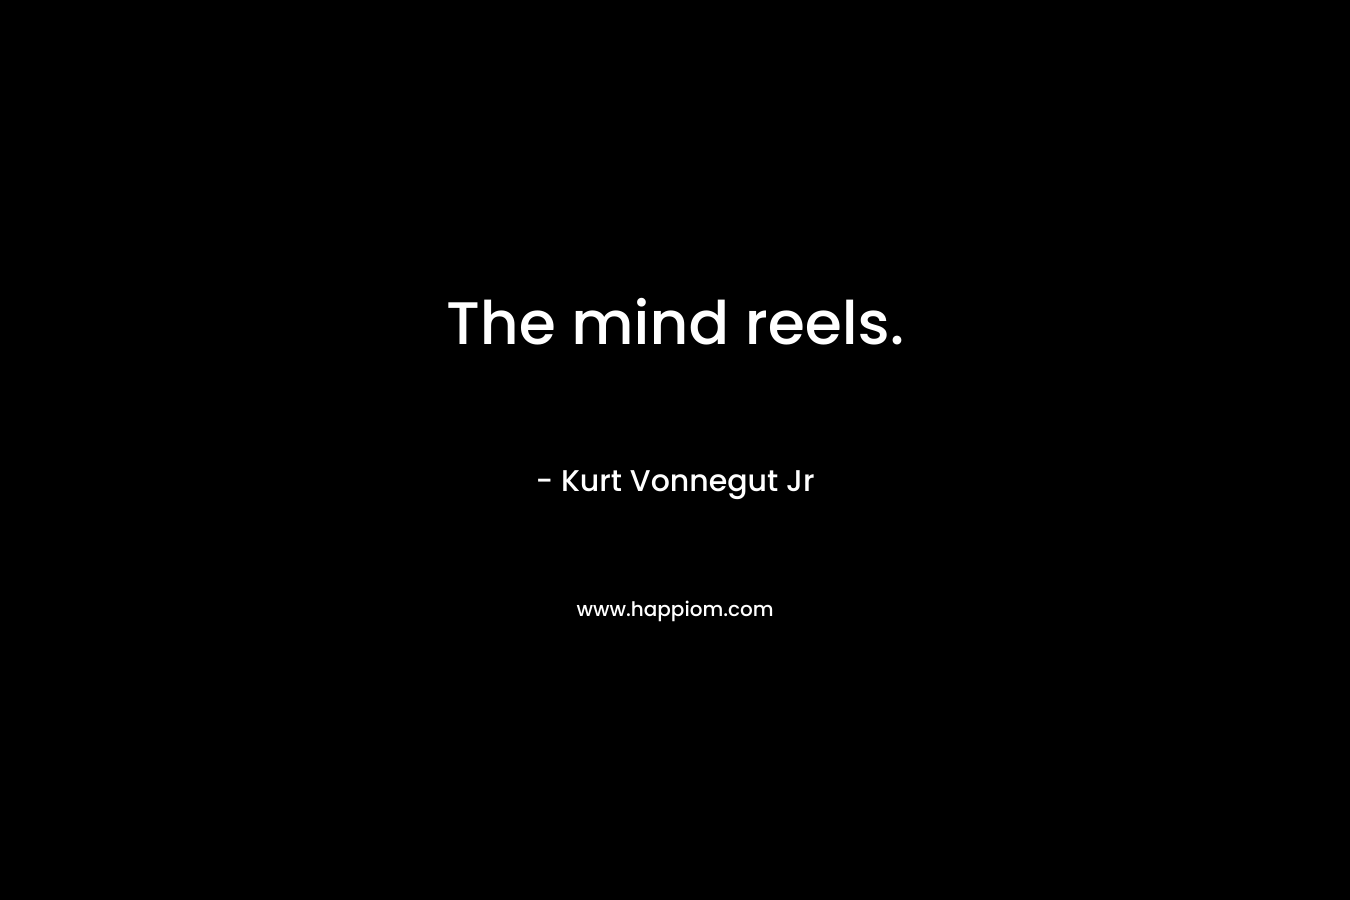 The mind reels.